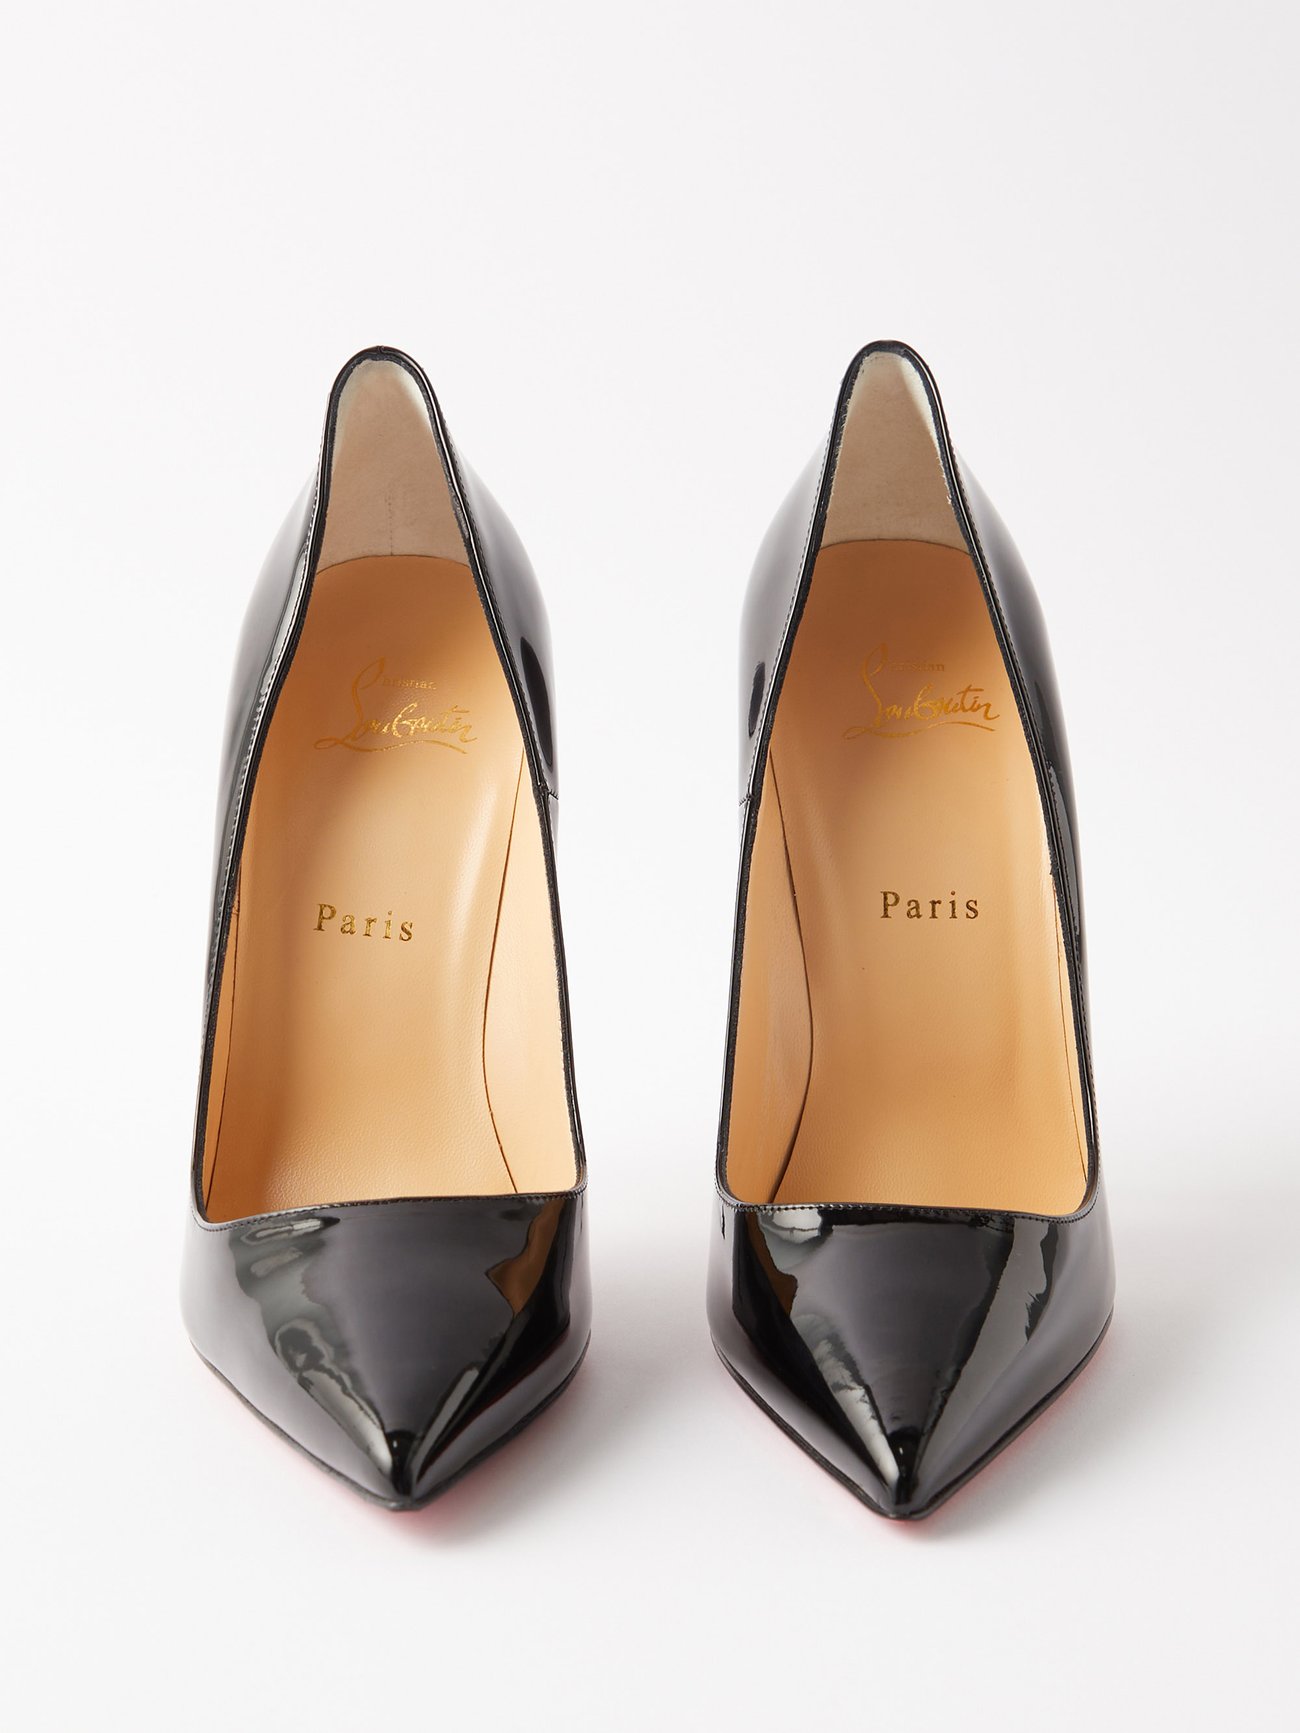 Christian Louboutin So Kate 120 mm (Black) – Shoes Post